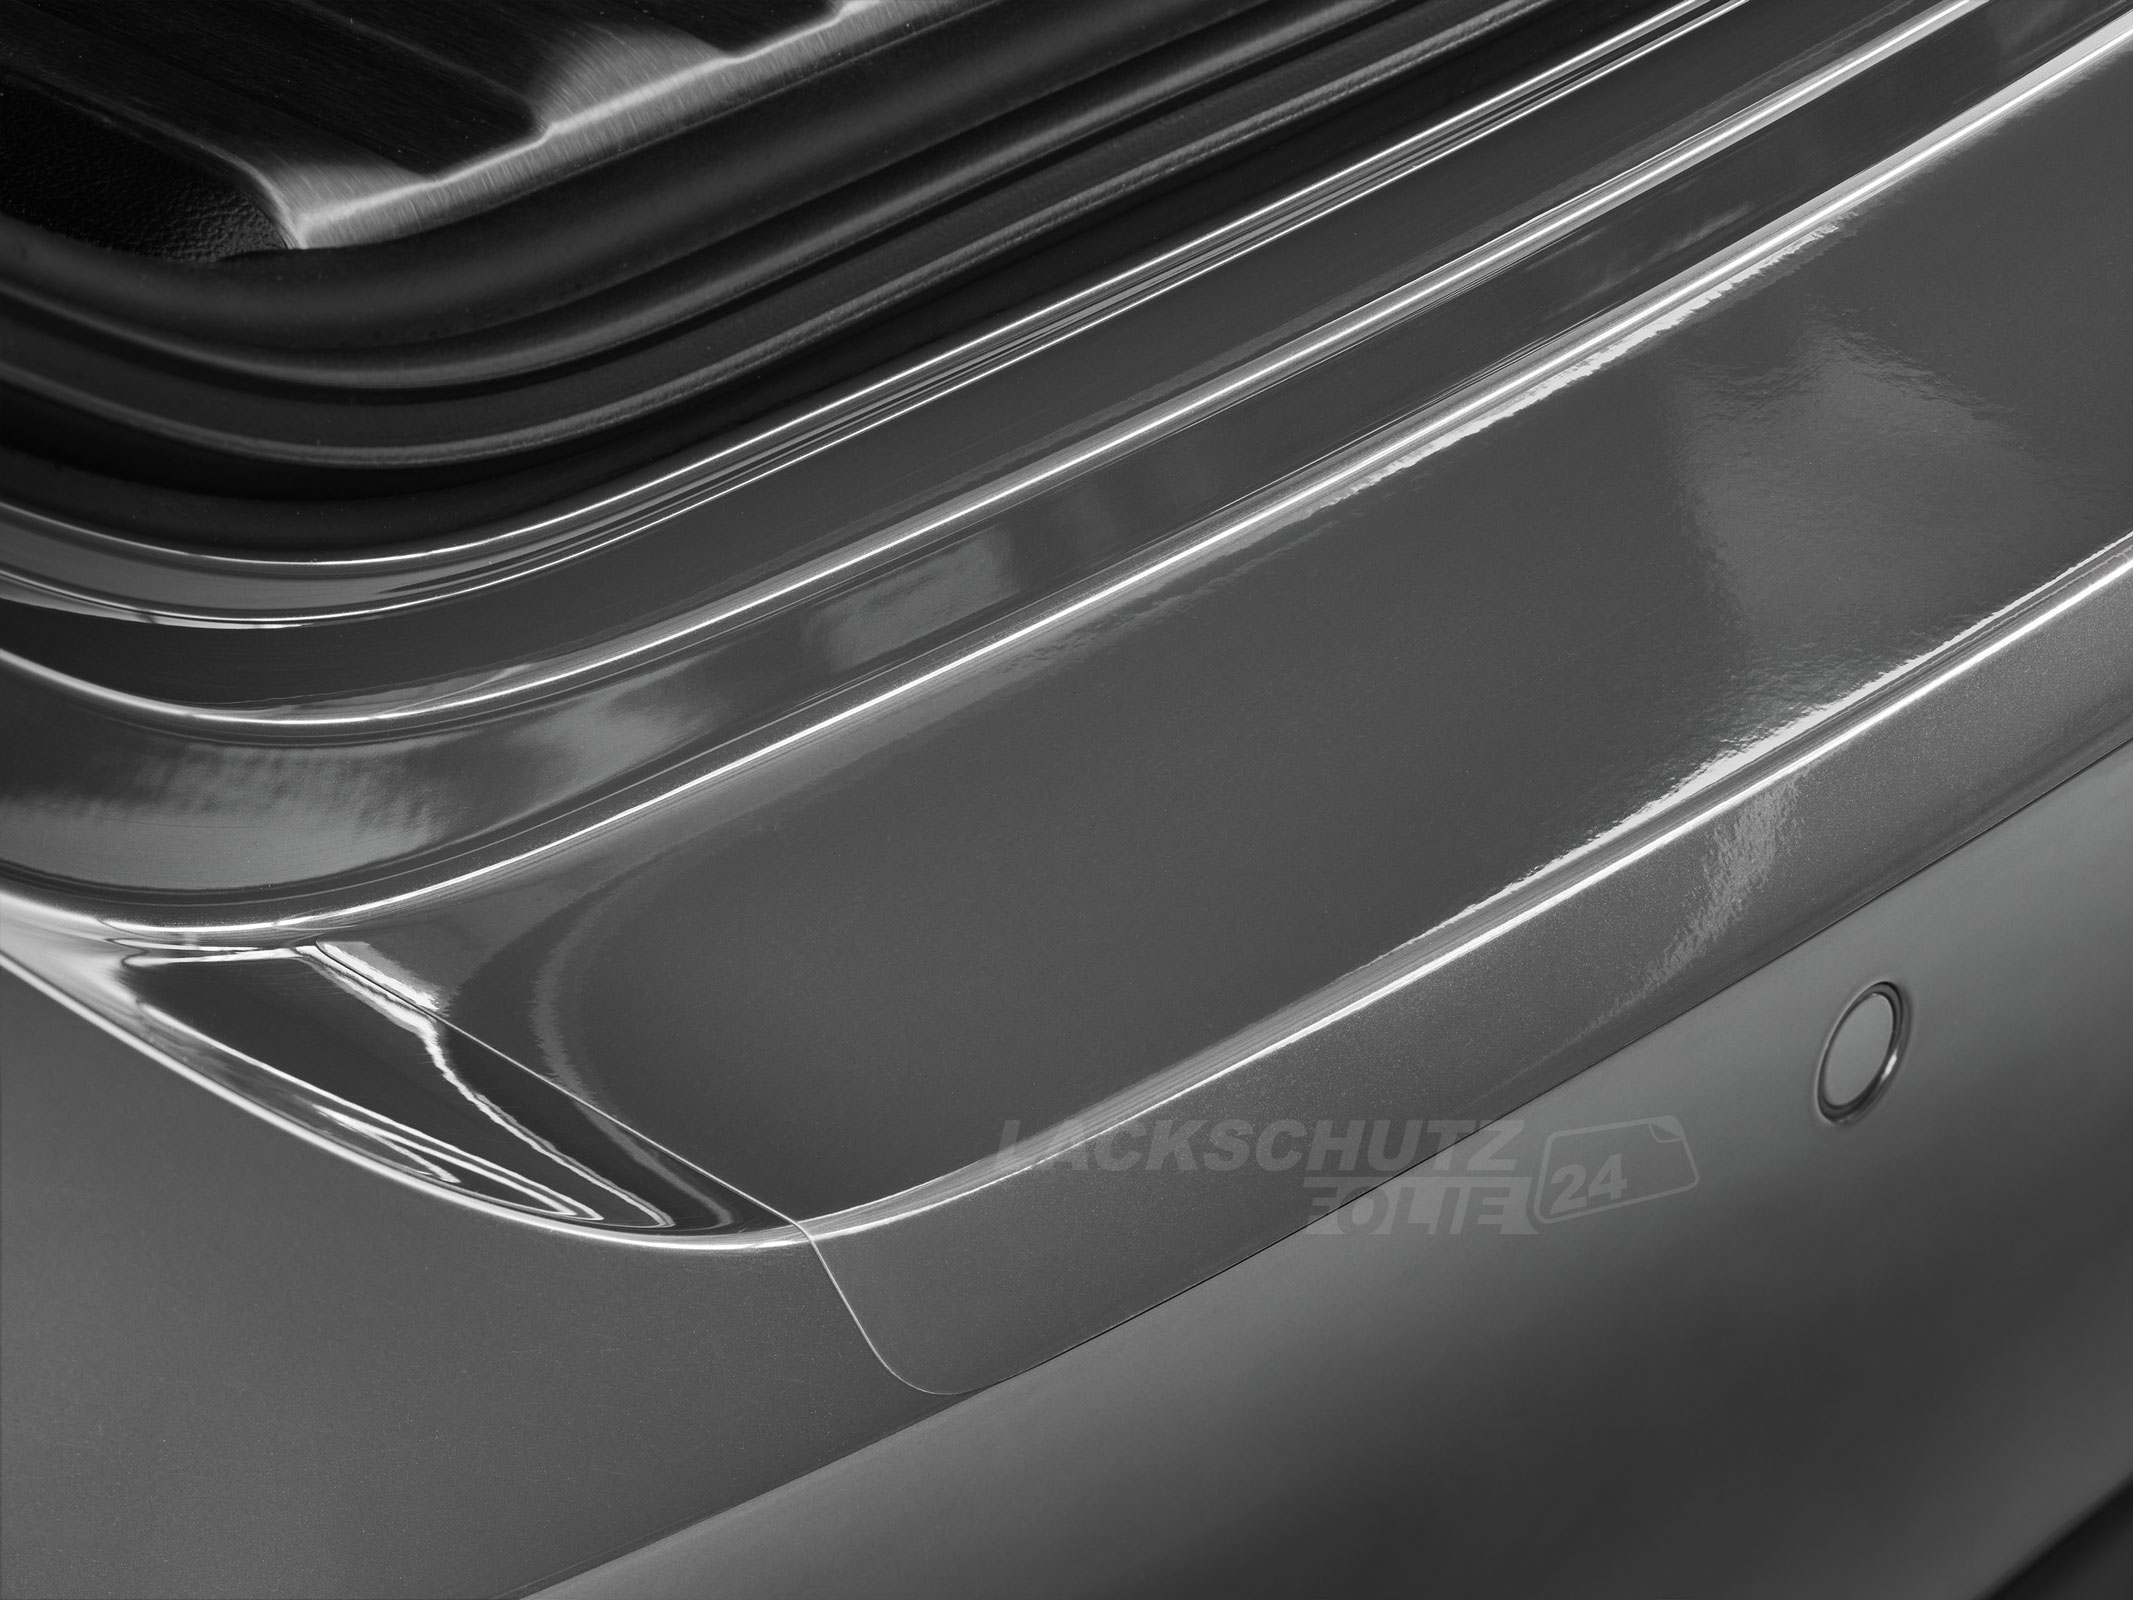 Ladekantenschutzfolie - Transparent Glatt Hochglänzend 240 µm stark für Audi A5 Sportback Typ 8T, BJ 2009-2016